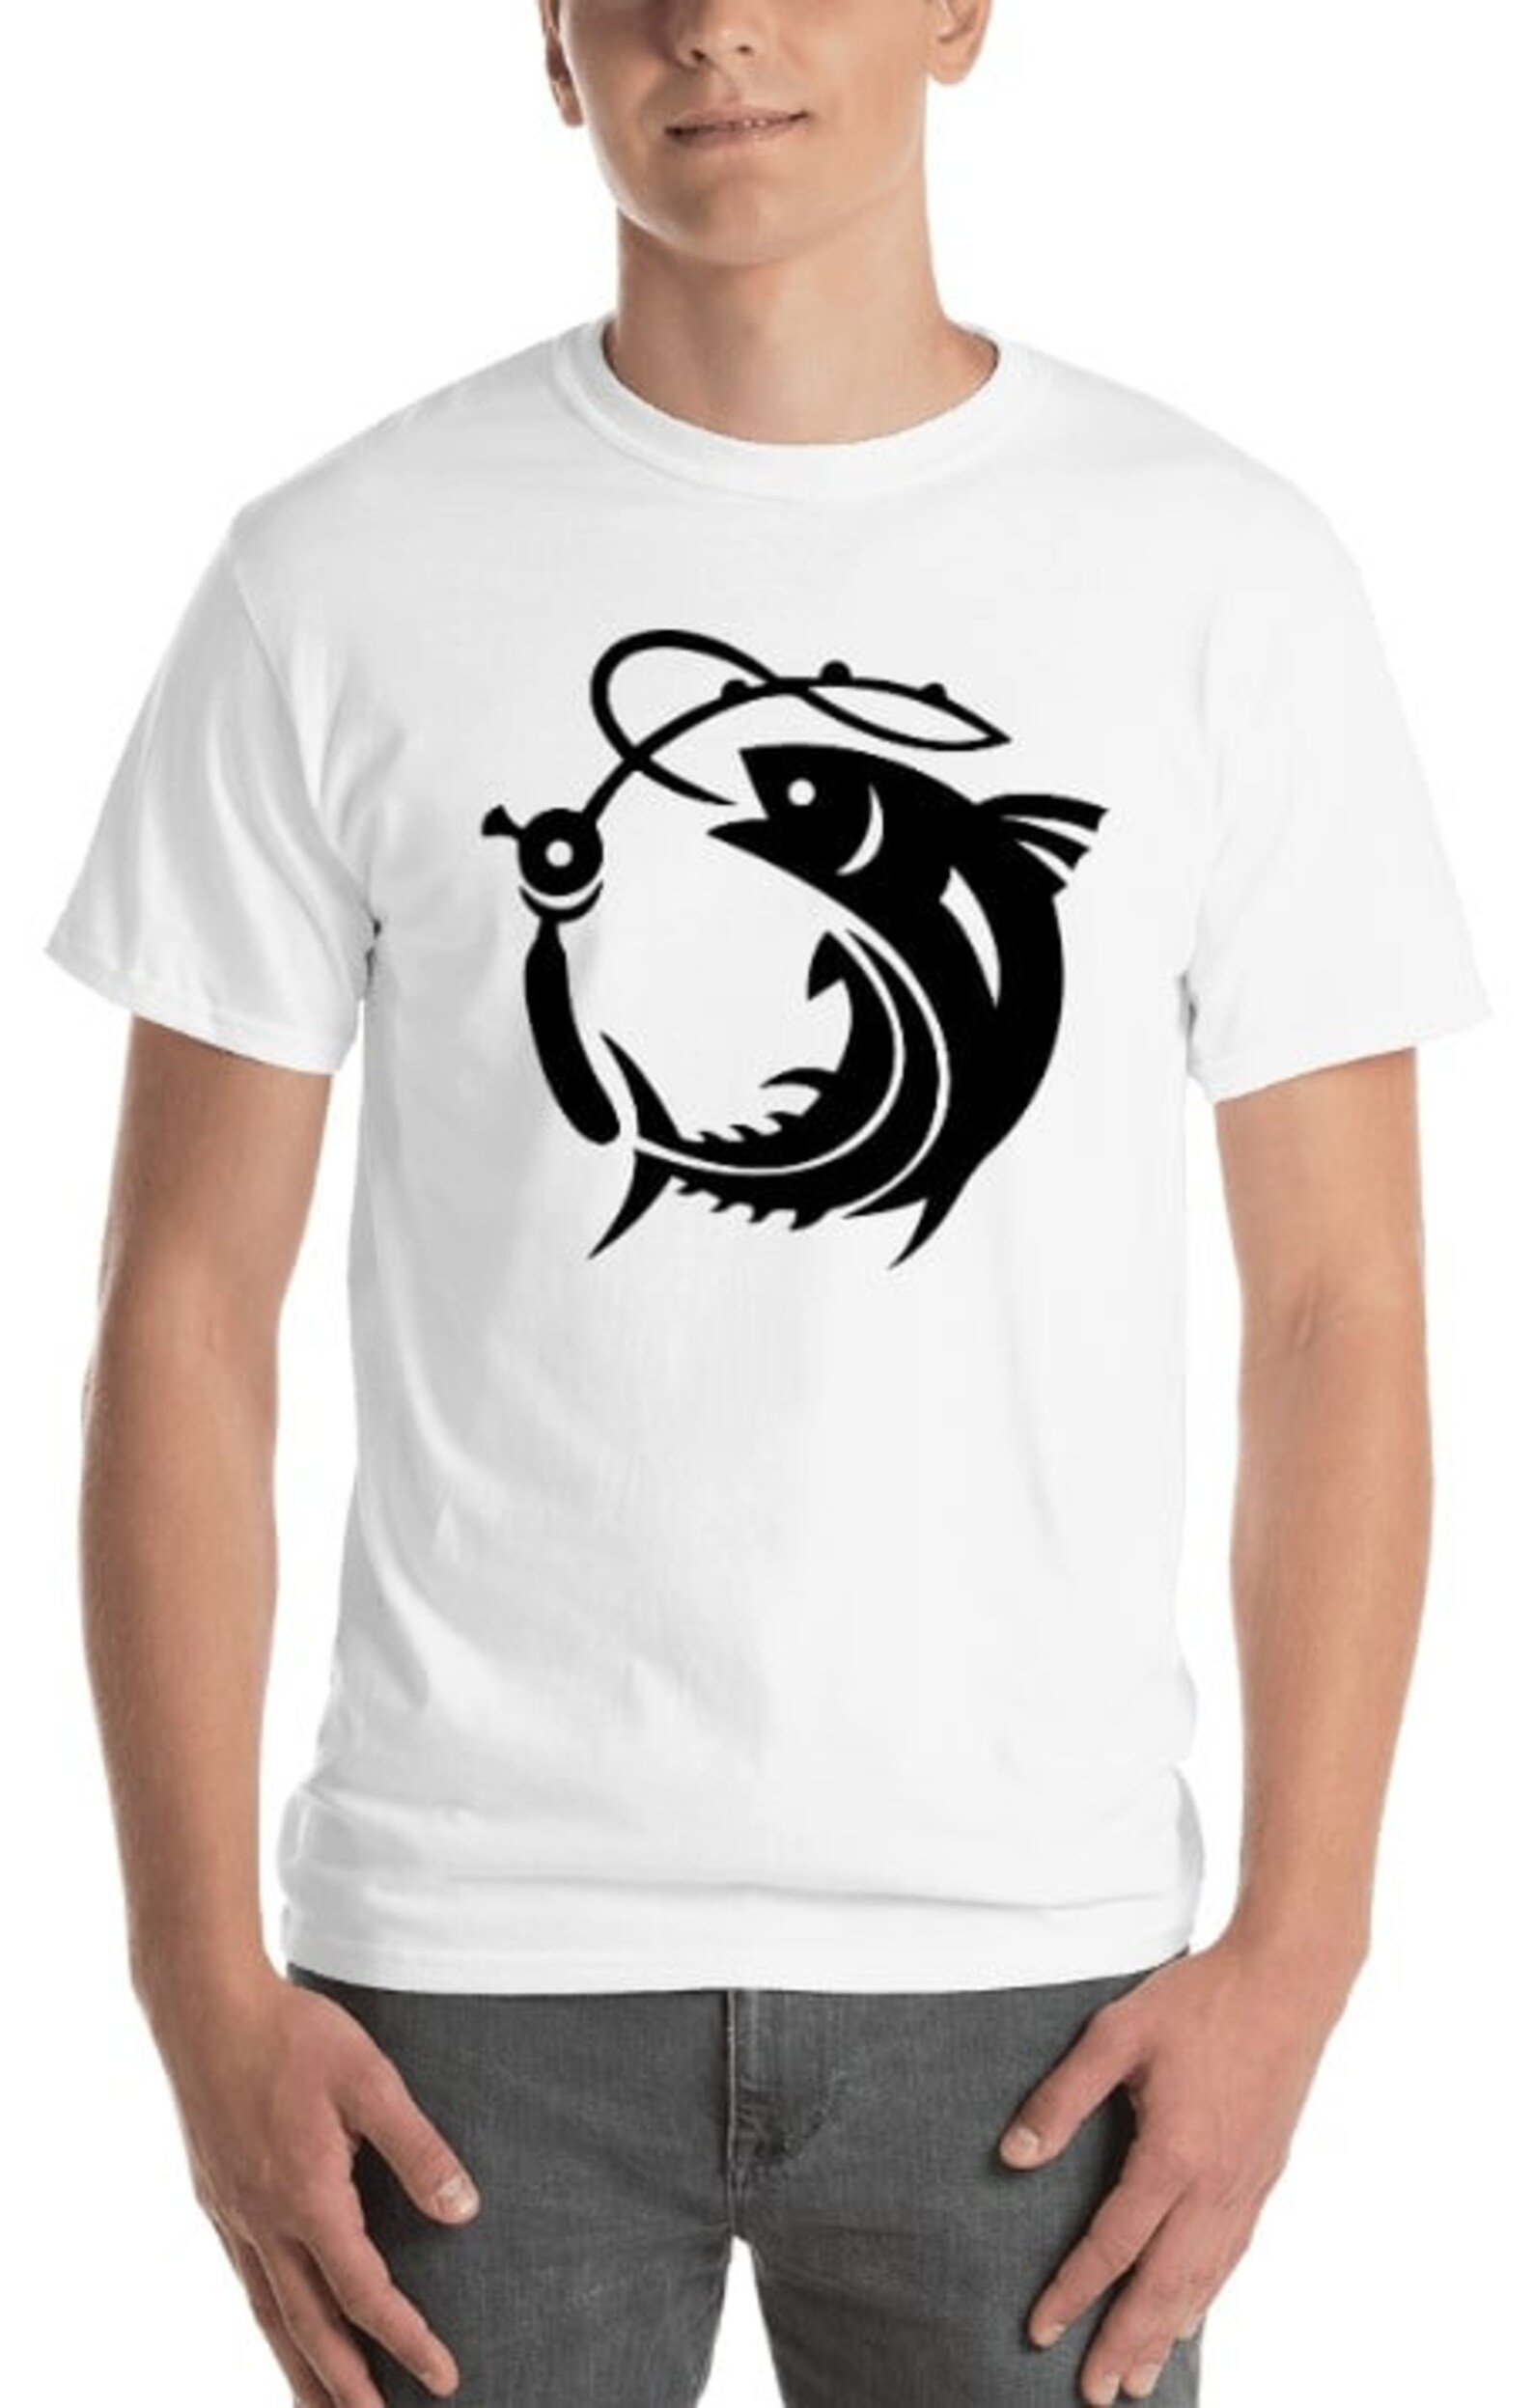 Huge black fish on the white t-shirt.